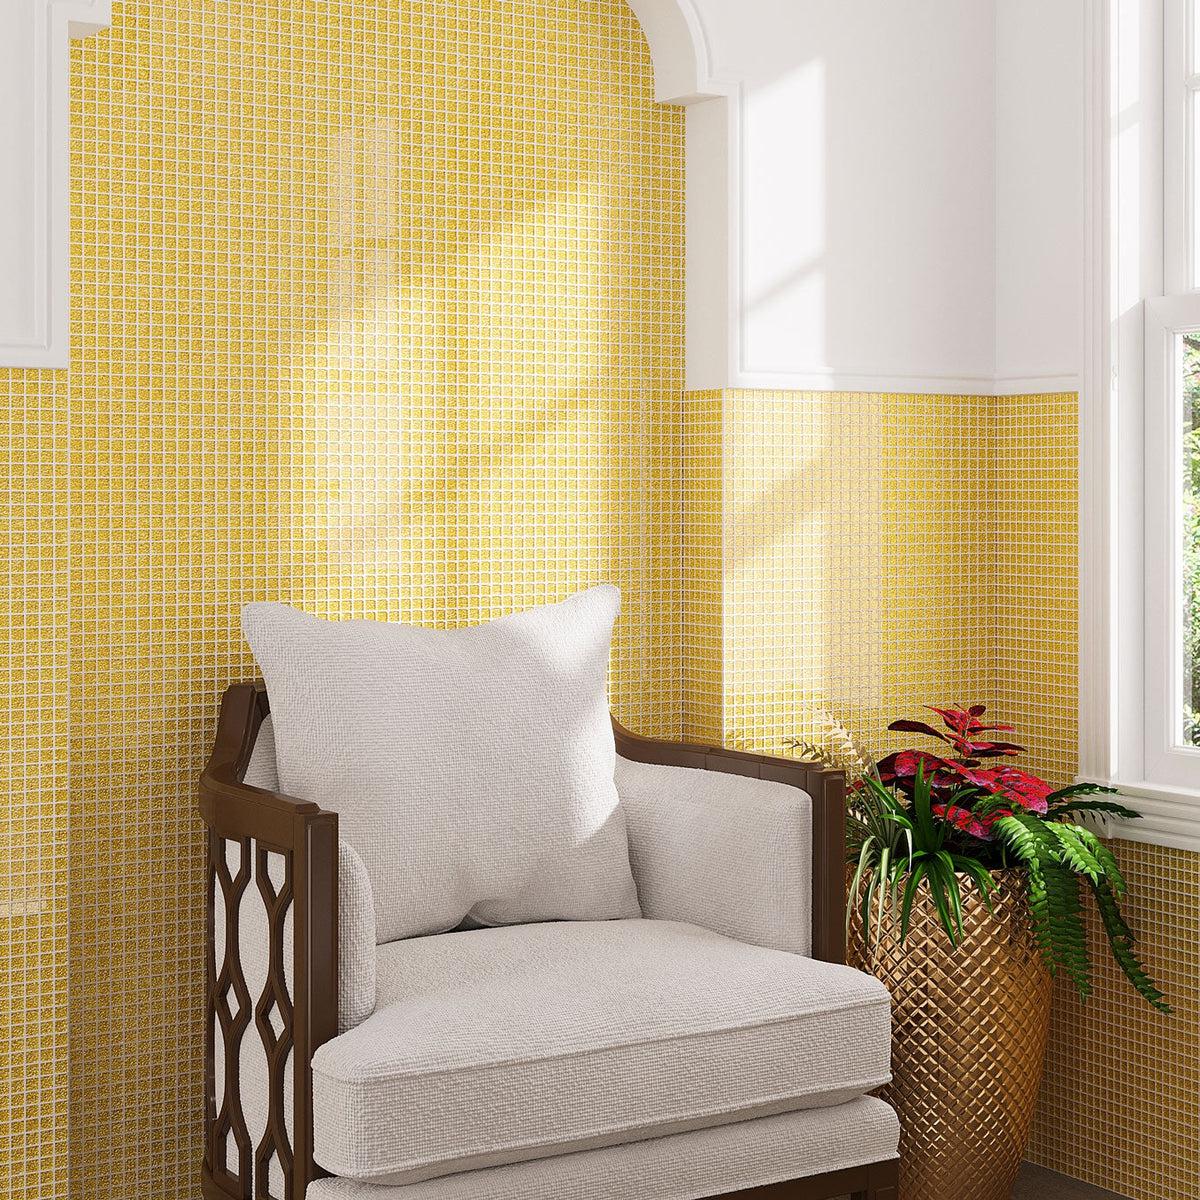 Boho bathroom decor with foiled yellow gold wall tile